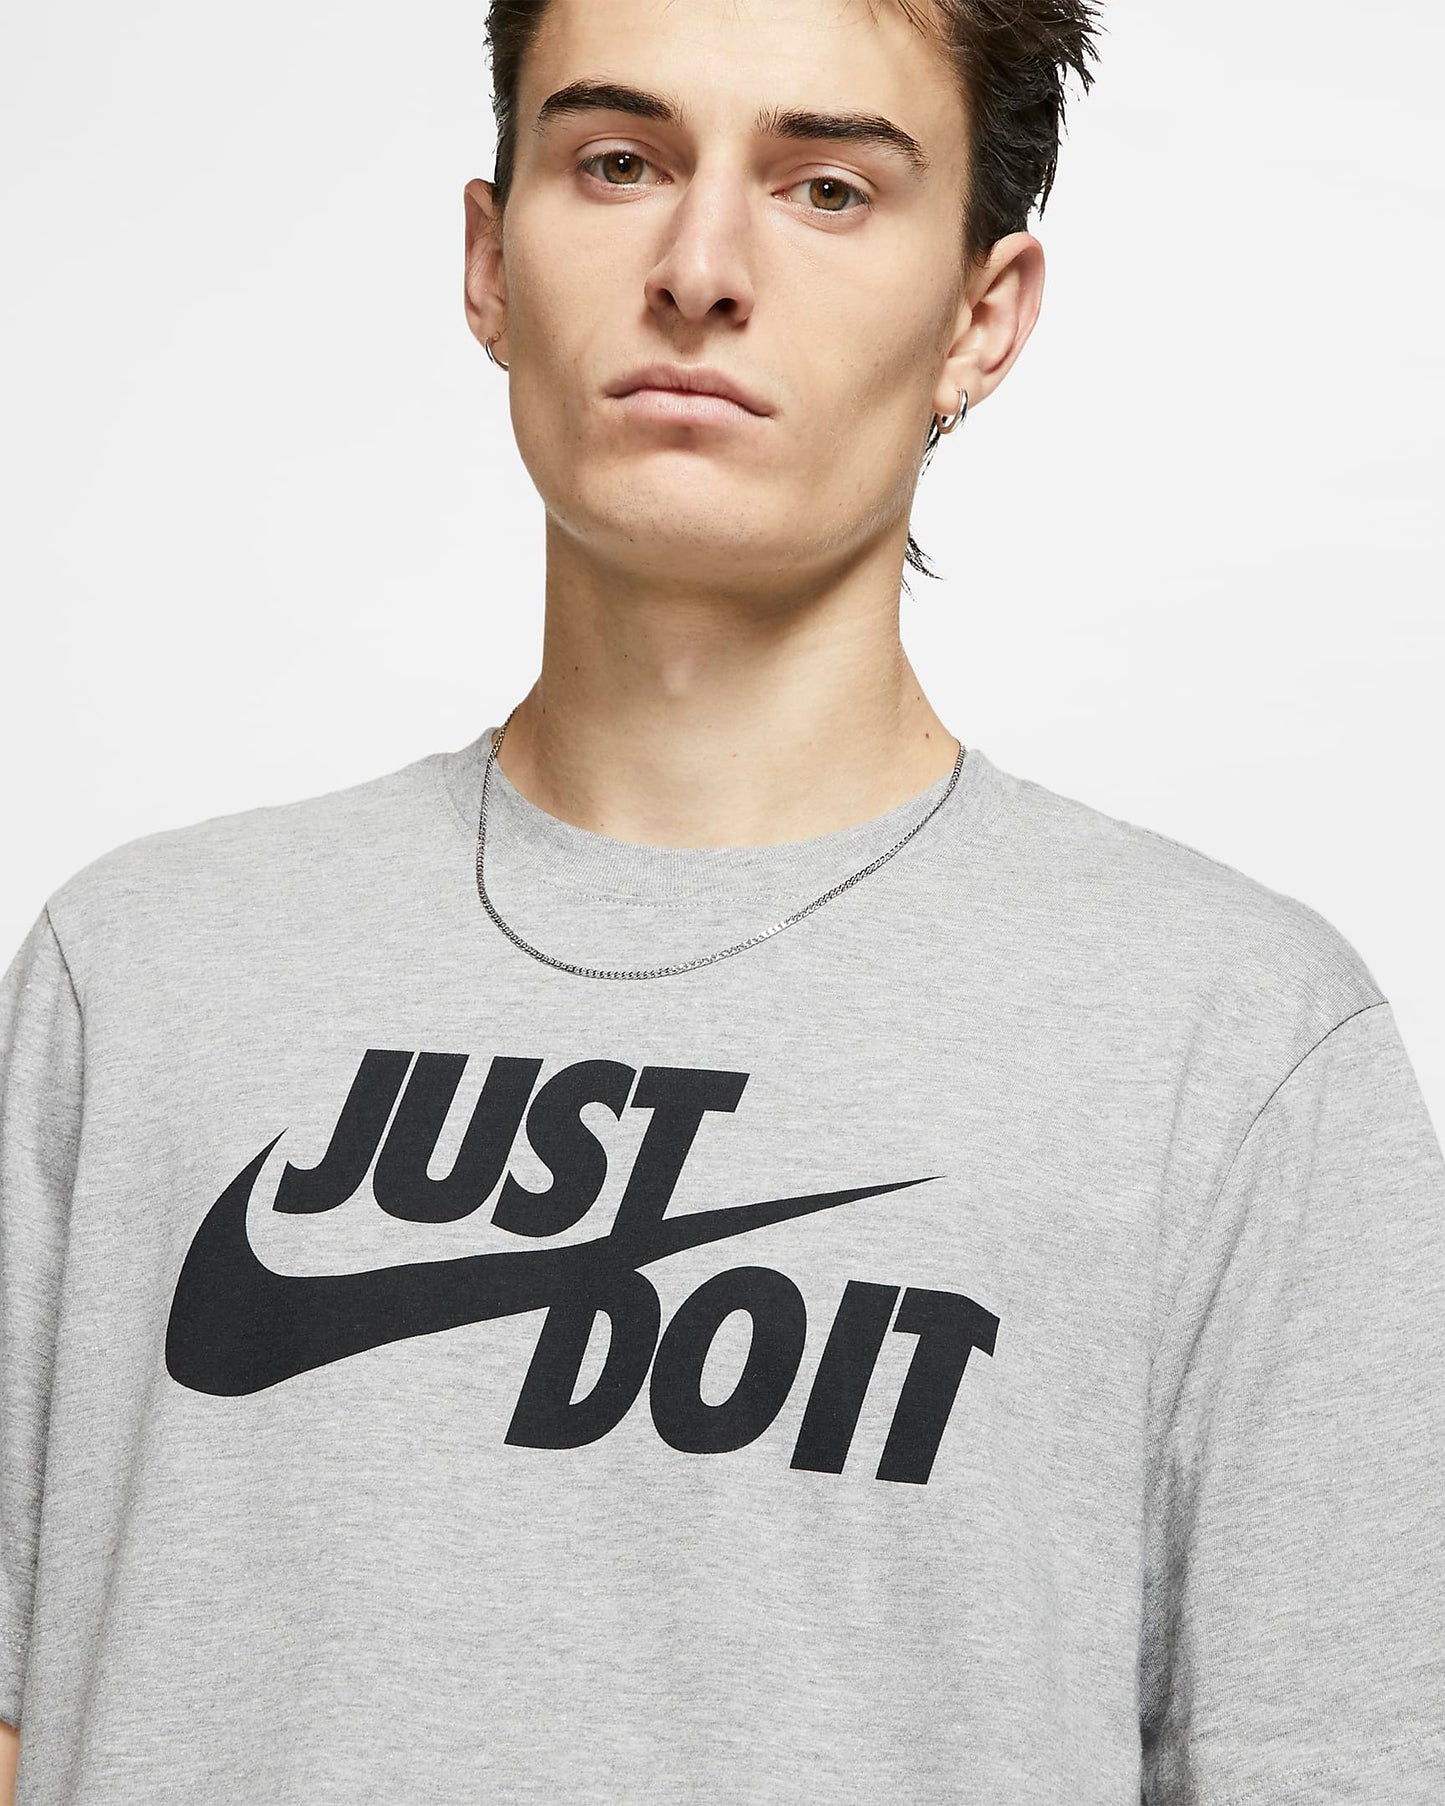 Nike NSW Just do it tshirt